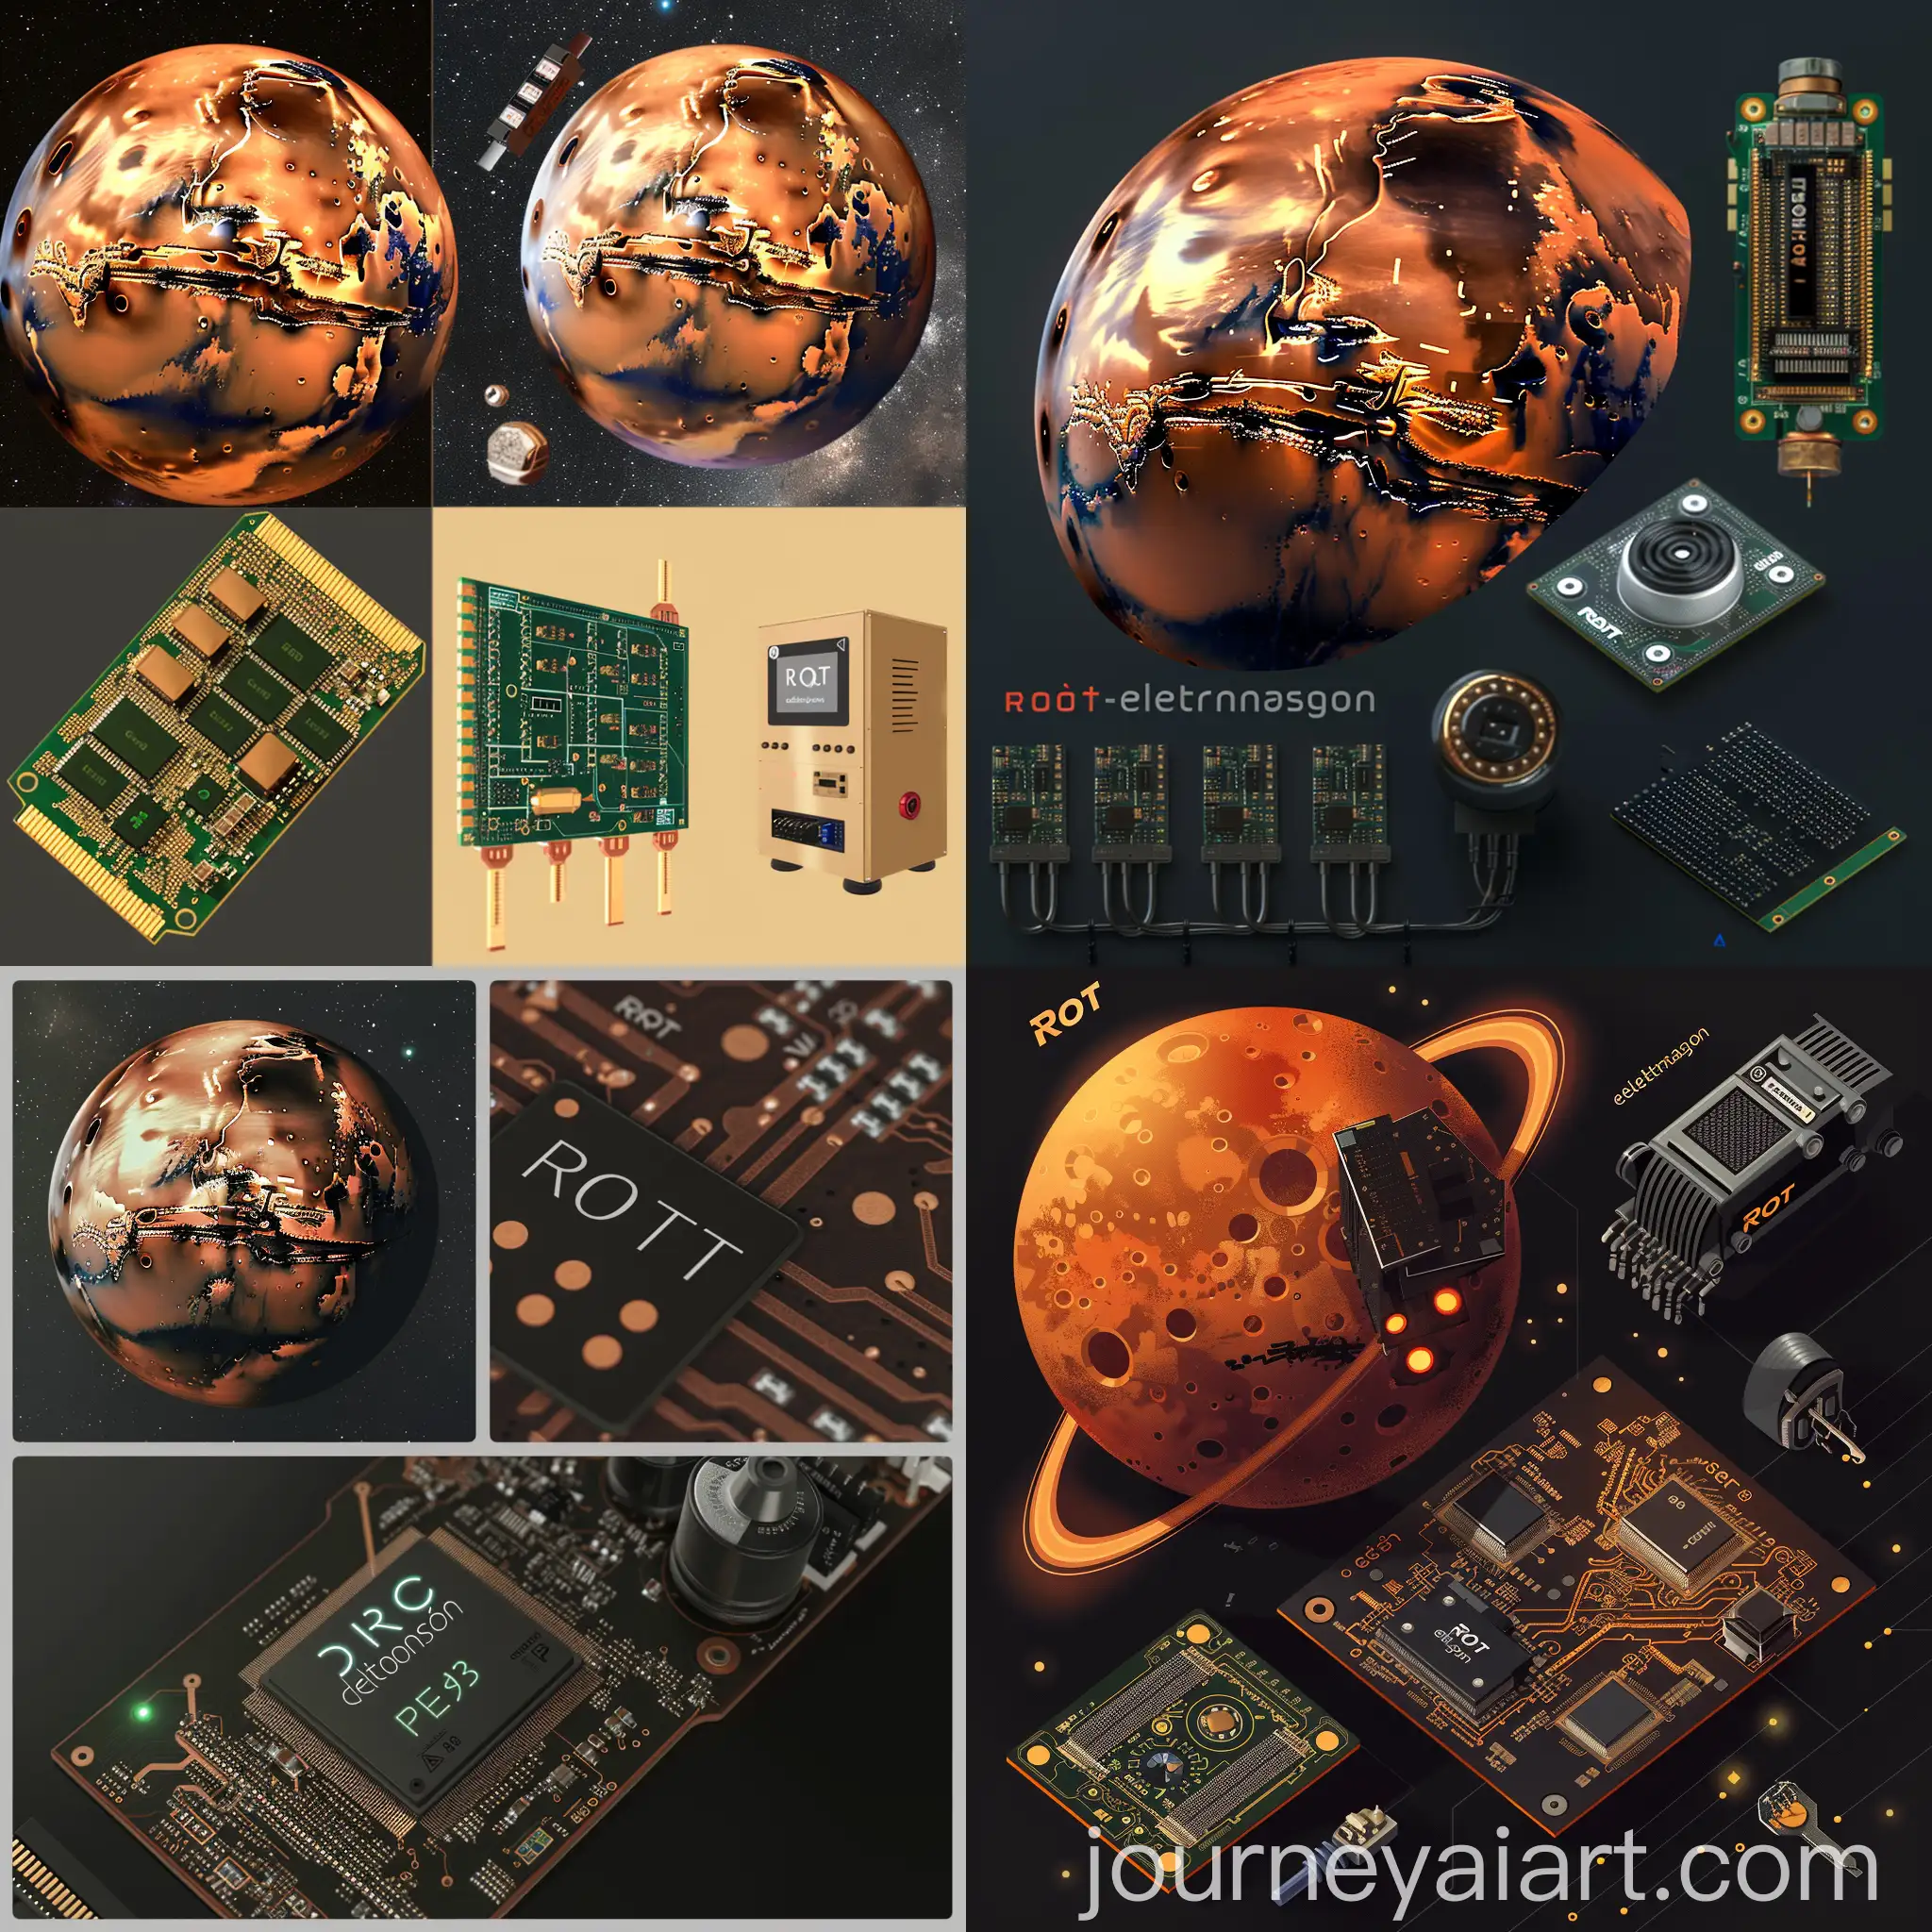 Futuristic-Electronics-Design-Firm-on-Mars-Advanced-Technology-Integration